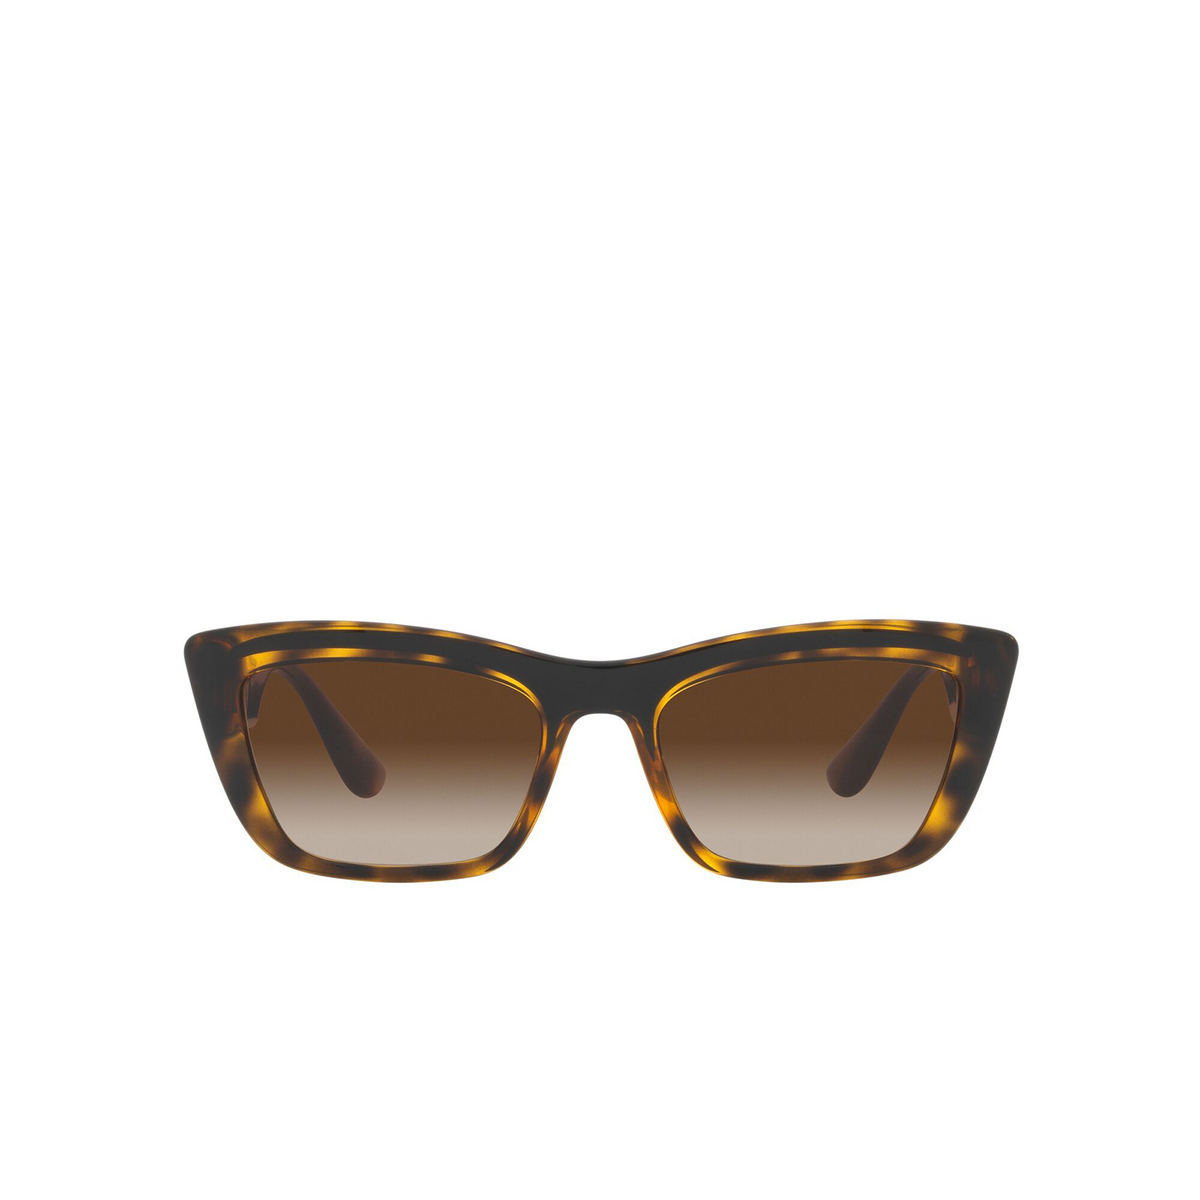 Dolce & Gabbana® Cat-eye Sunglasses: DG6171 color Havana / Black 330613 - front view.